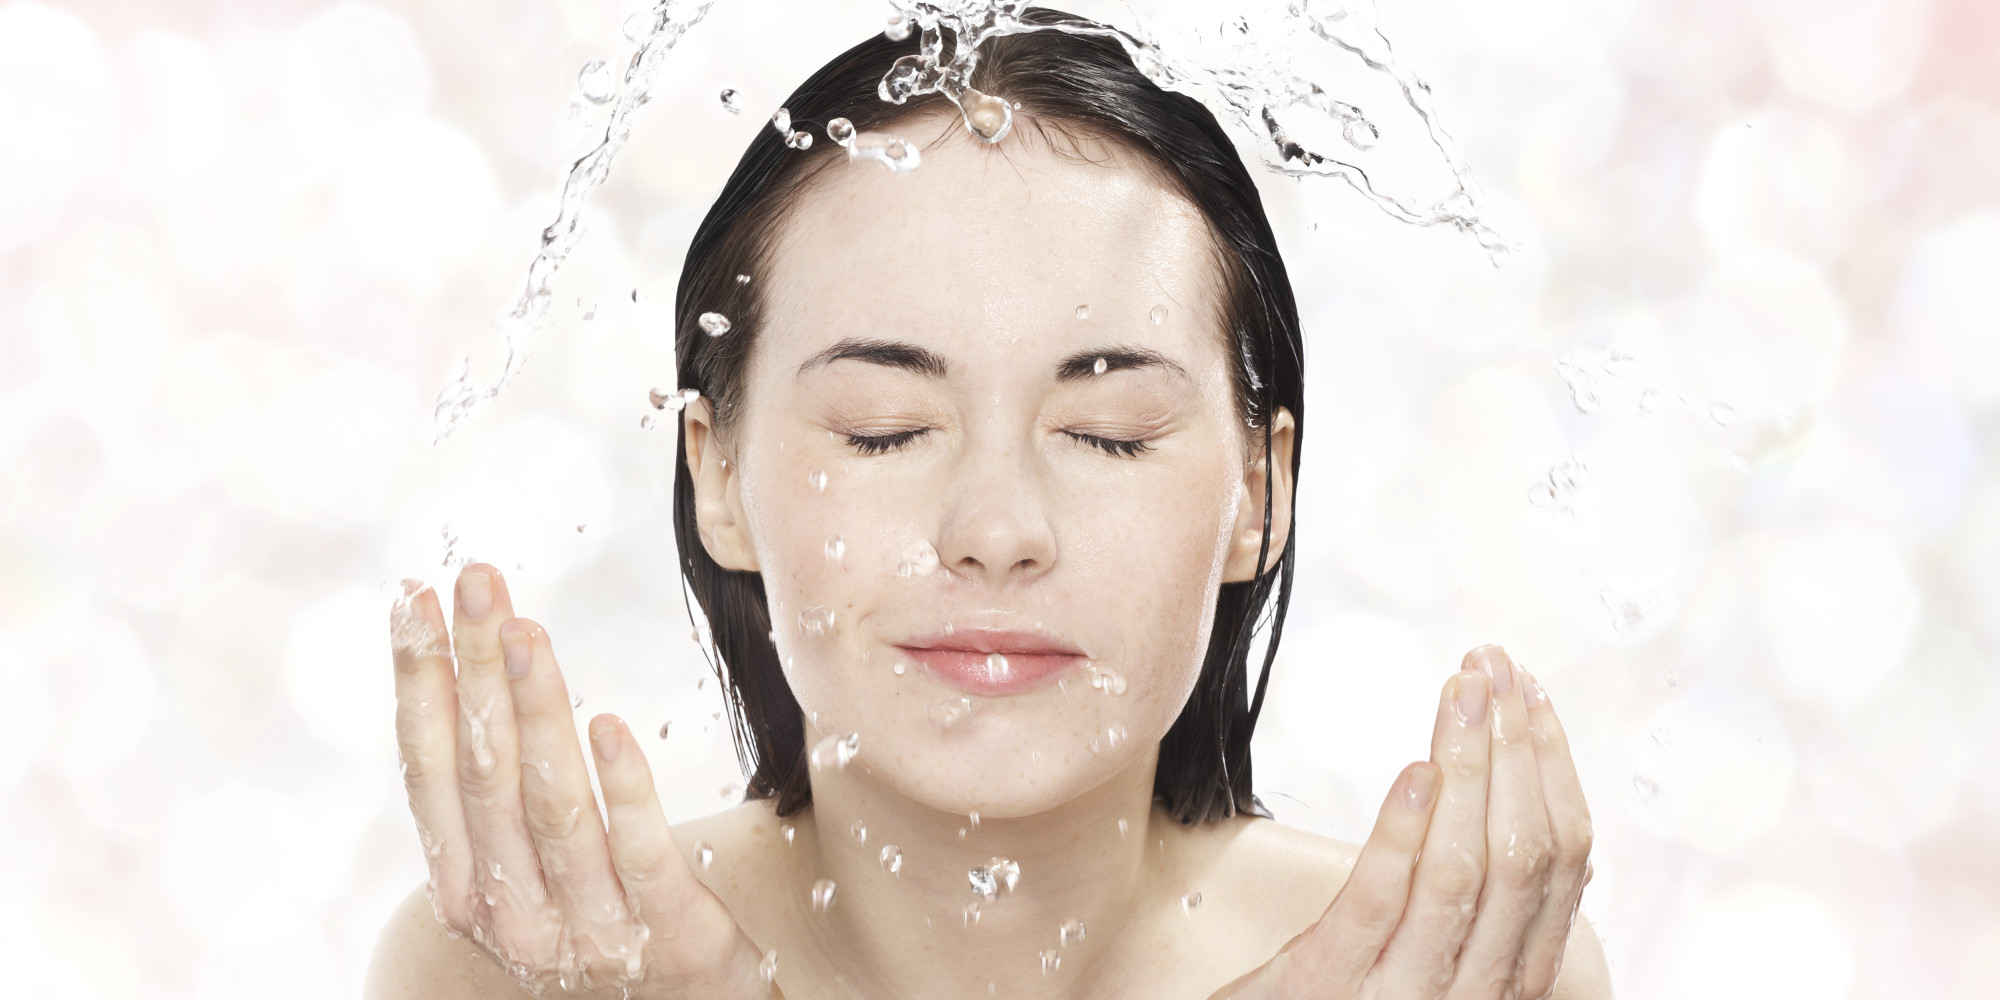 Cooling & Energize Your Skin with Salcool Face Wash - PT. Marga Dwi Kencana